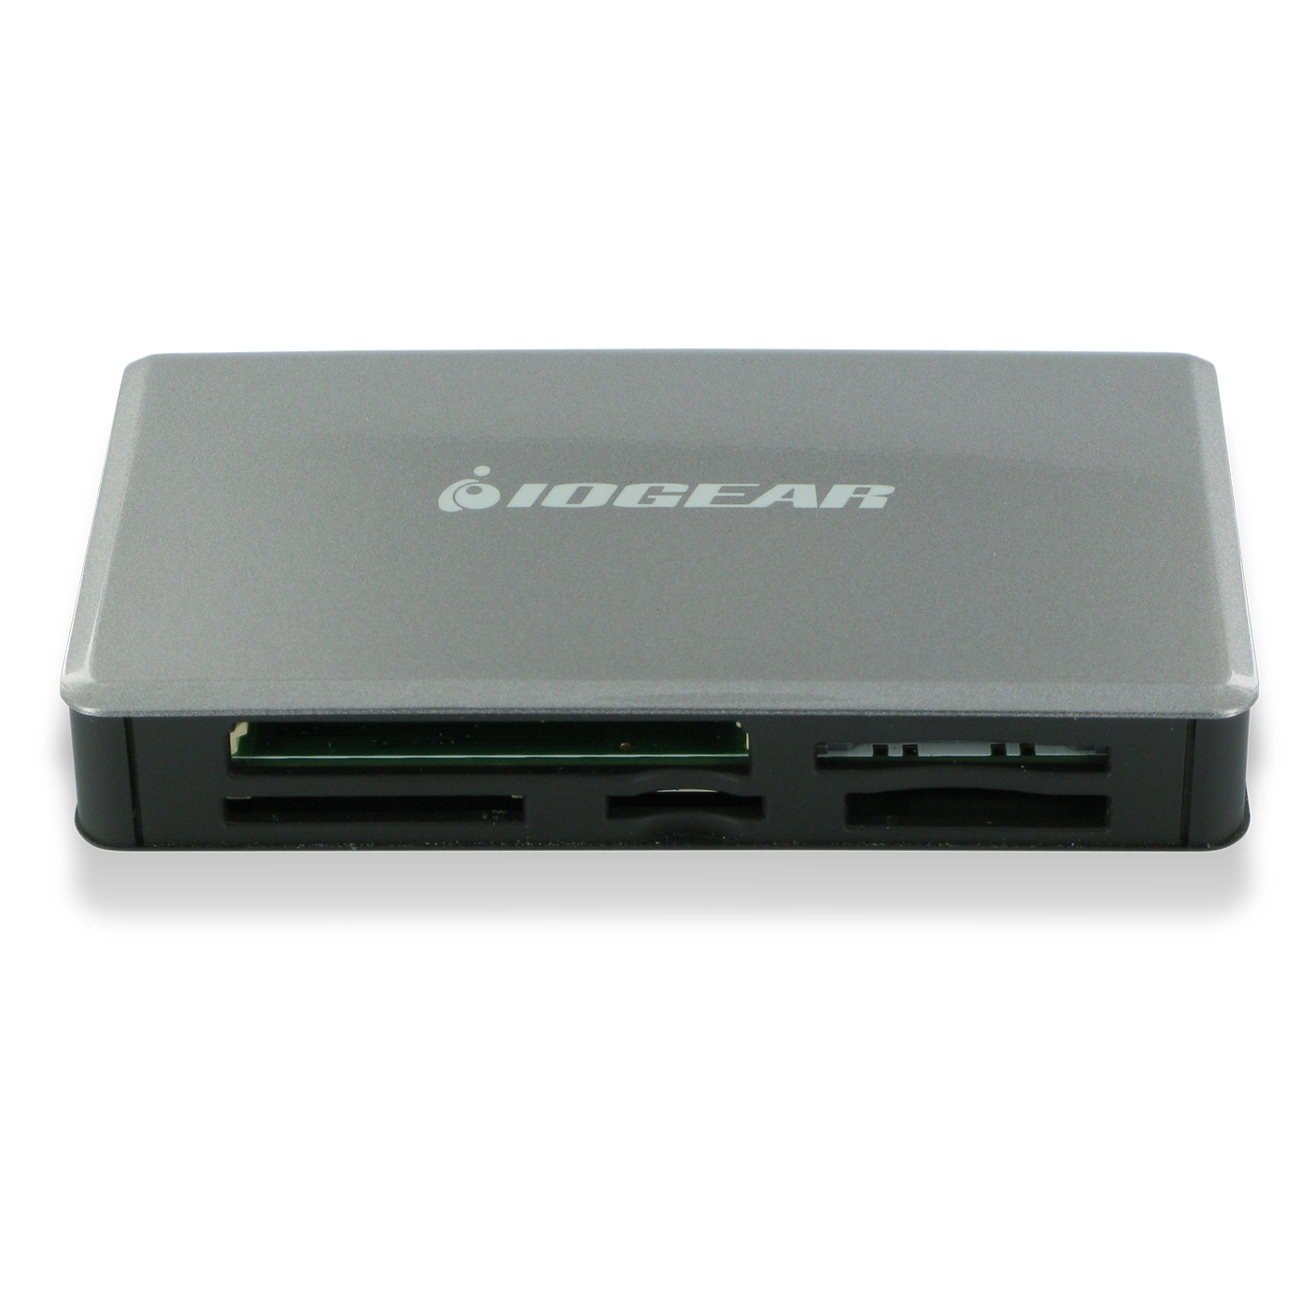 IOGEAR GFR281 USB 2.0 56-in-1 Memory Card Reader / Writer - image 2 of 2